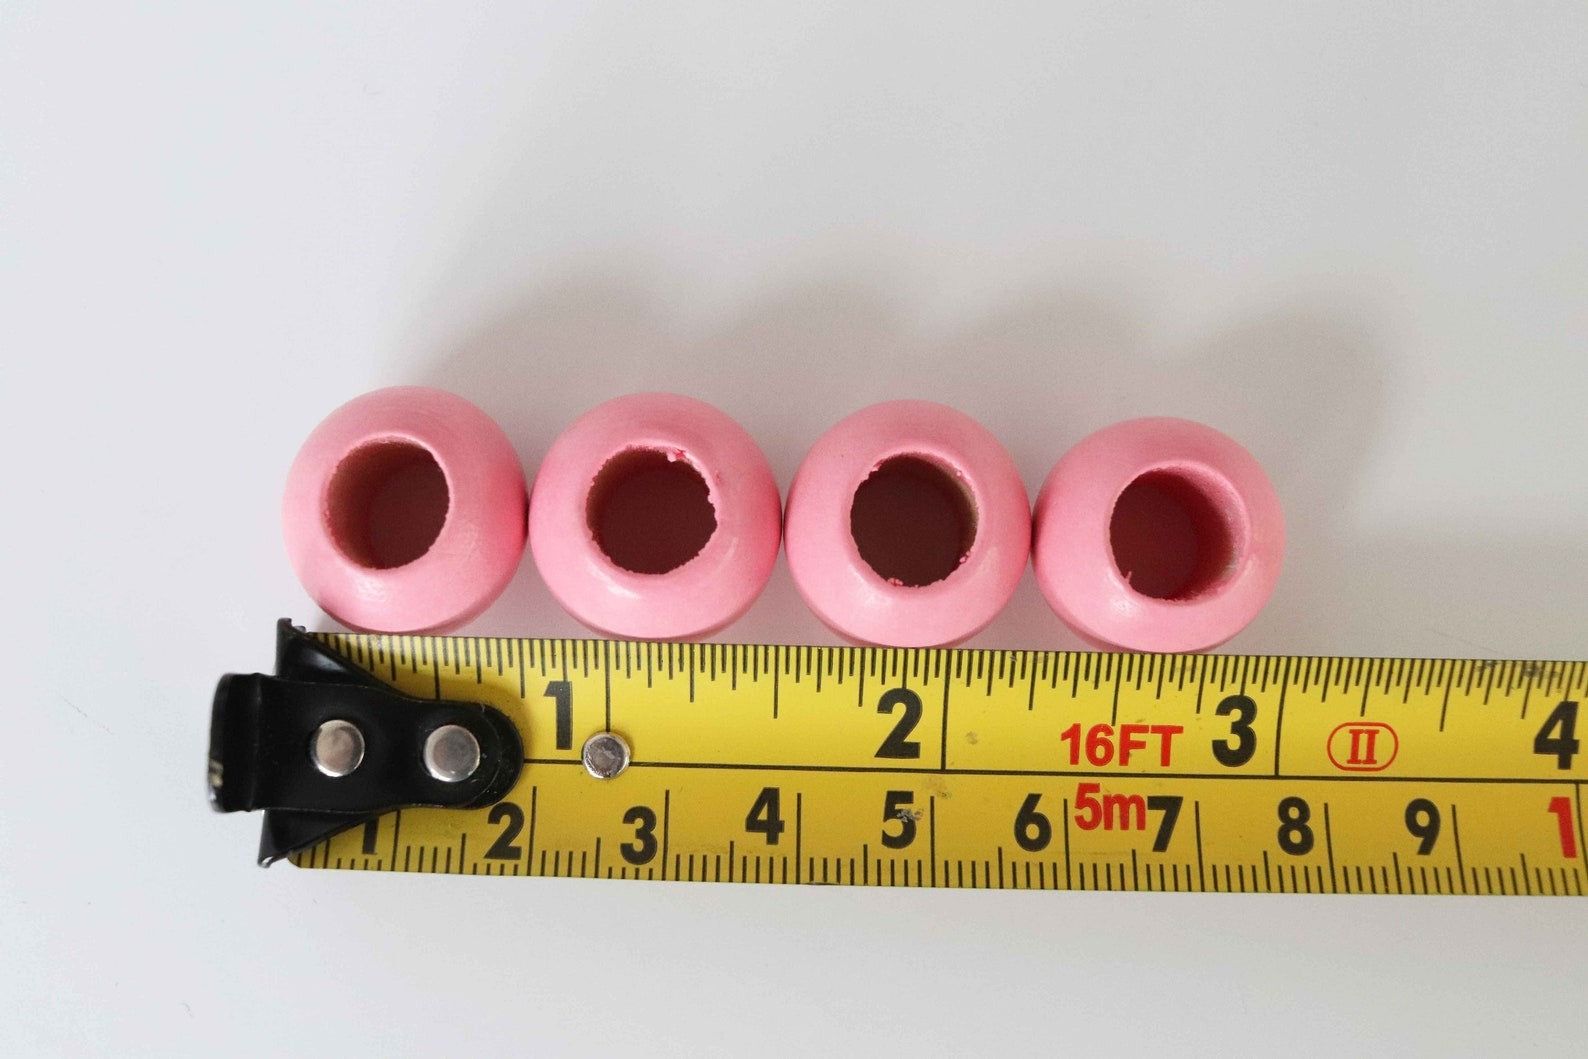 macrame large hole beads with a tape measure